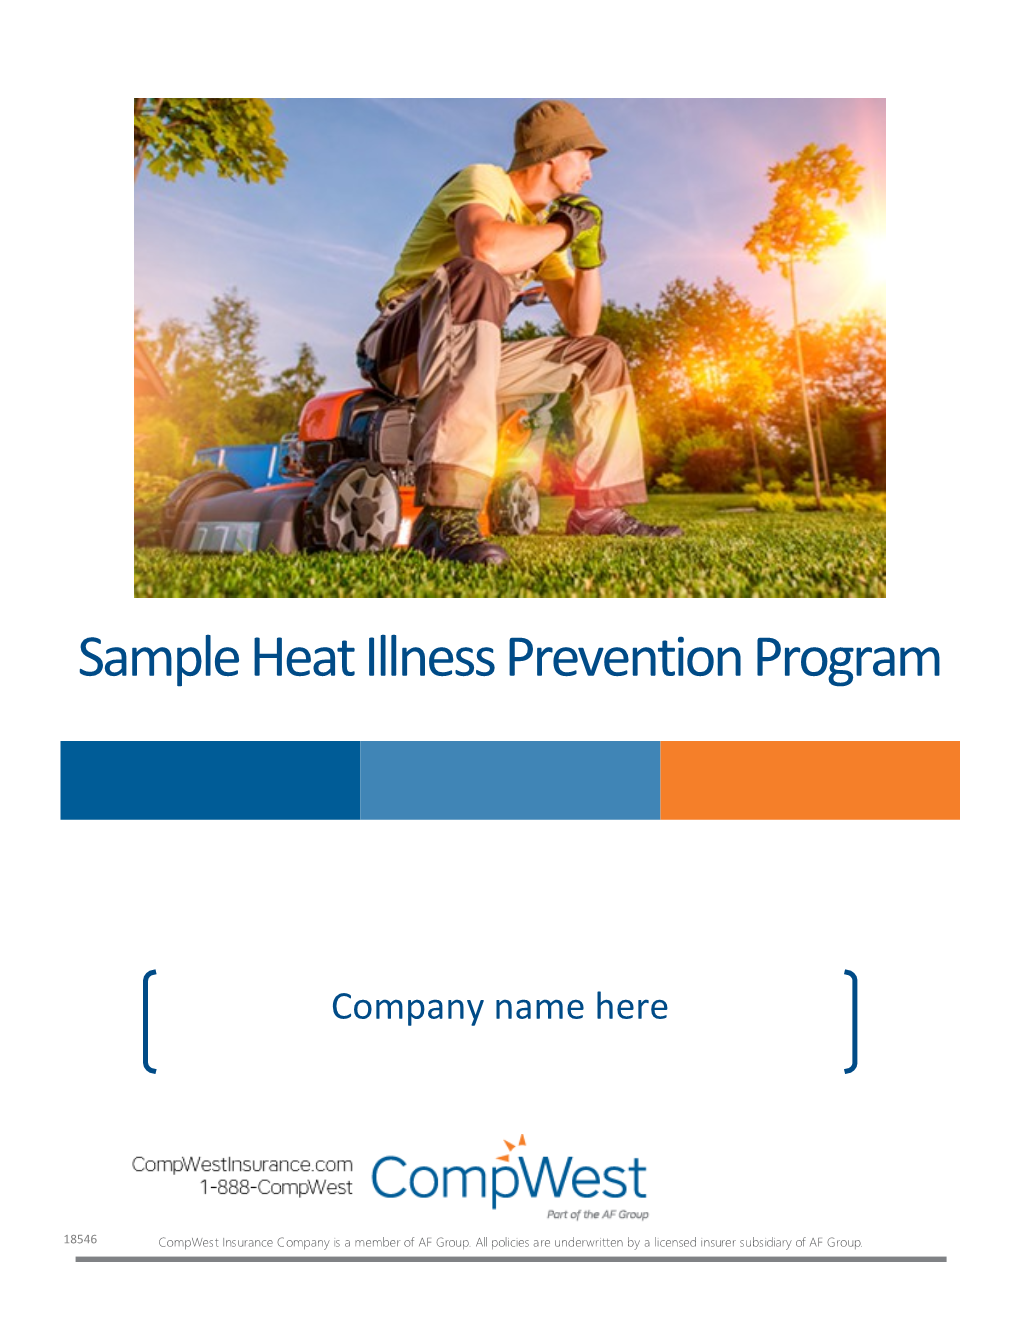 Sample Heat Illness Prevention Program